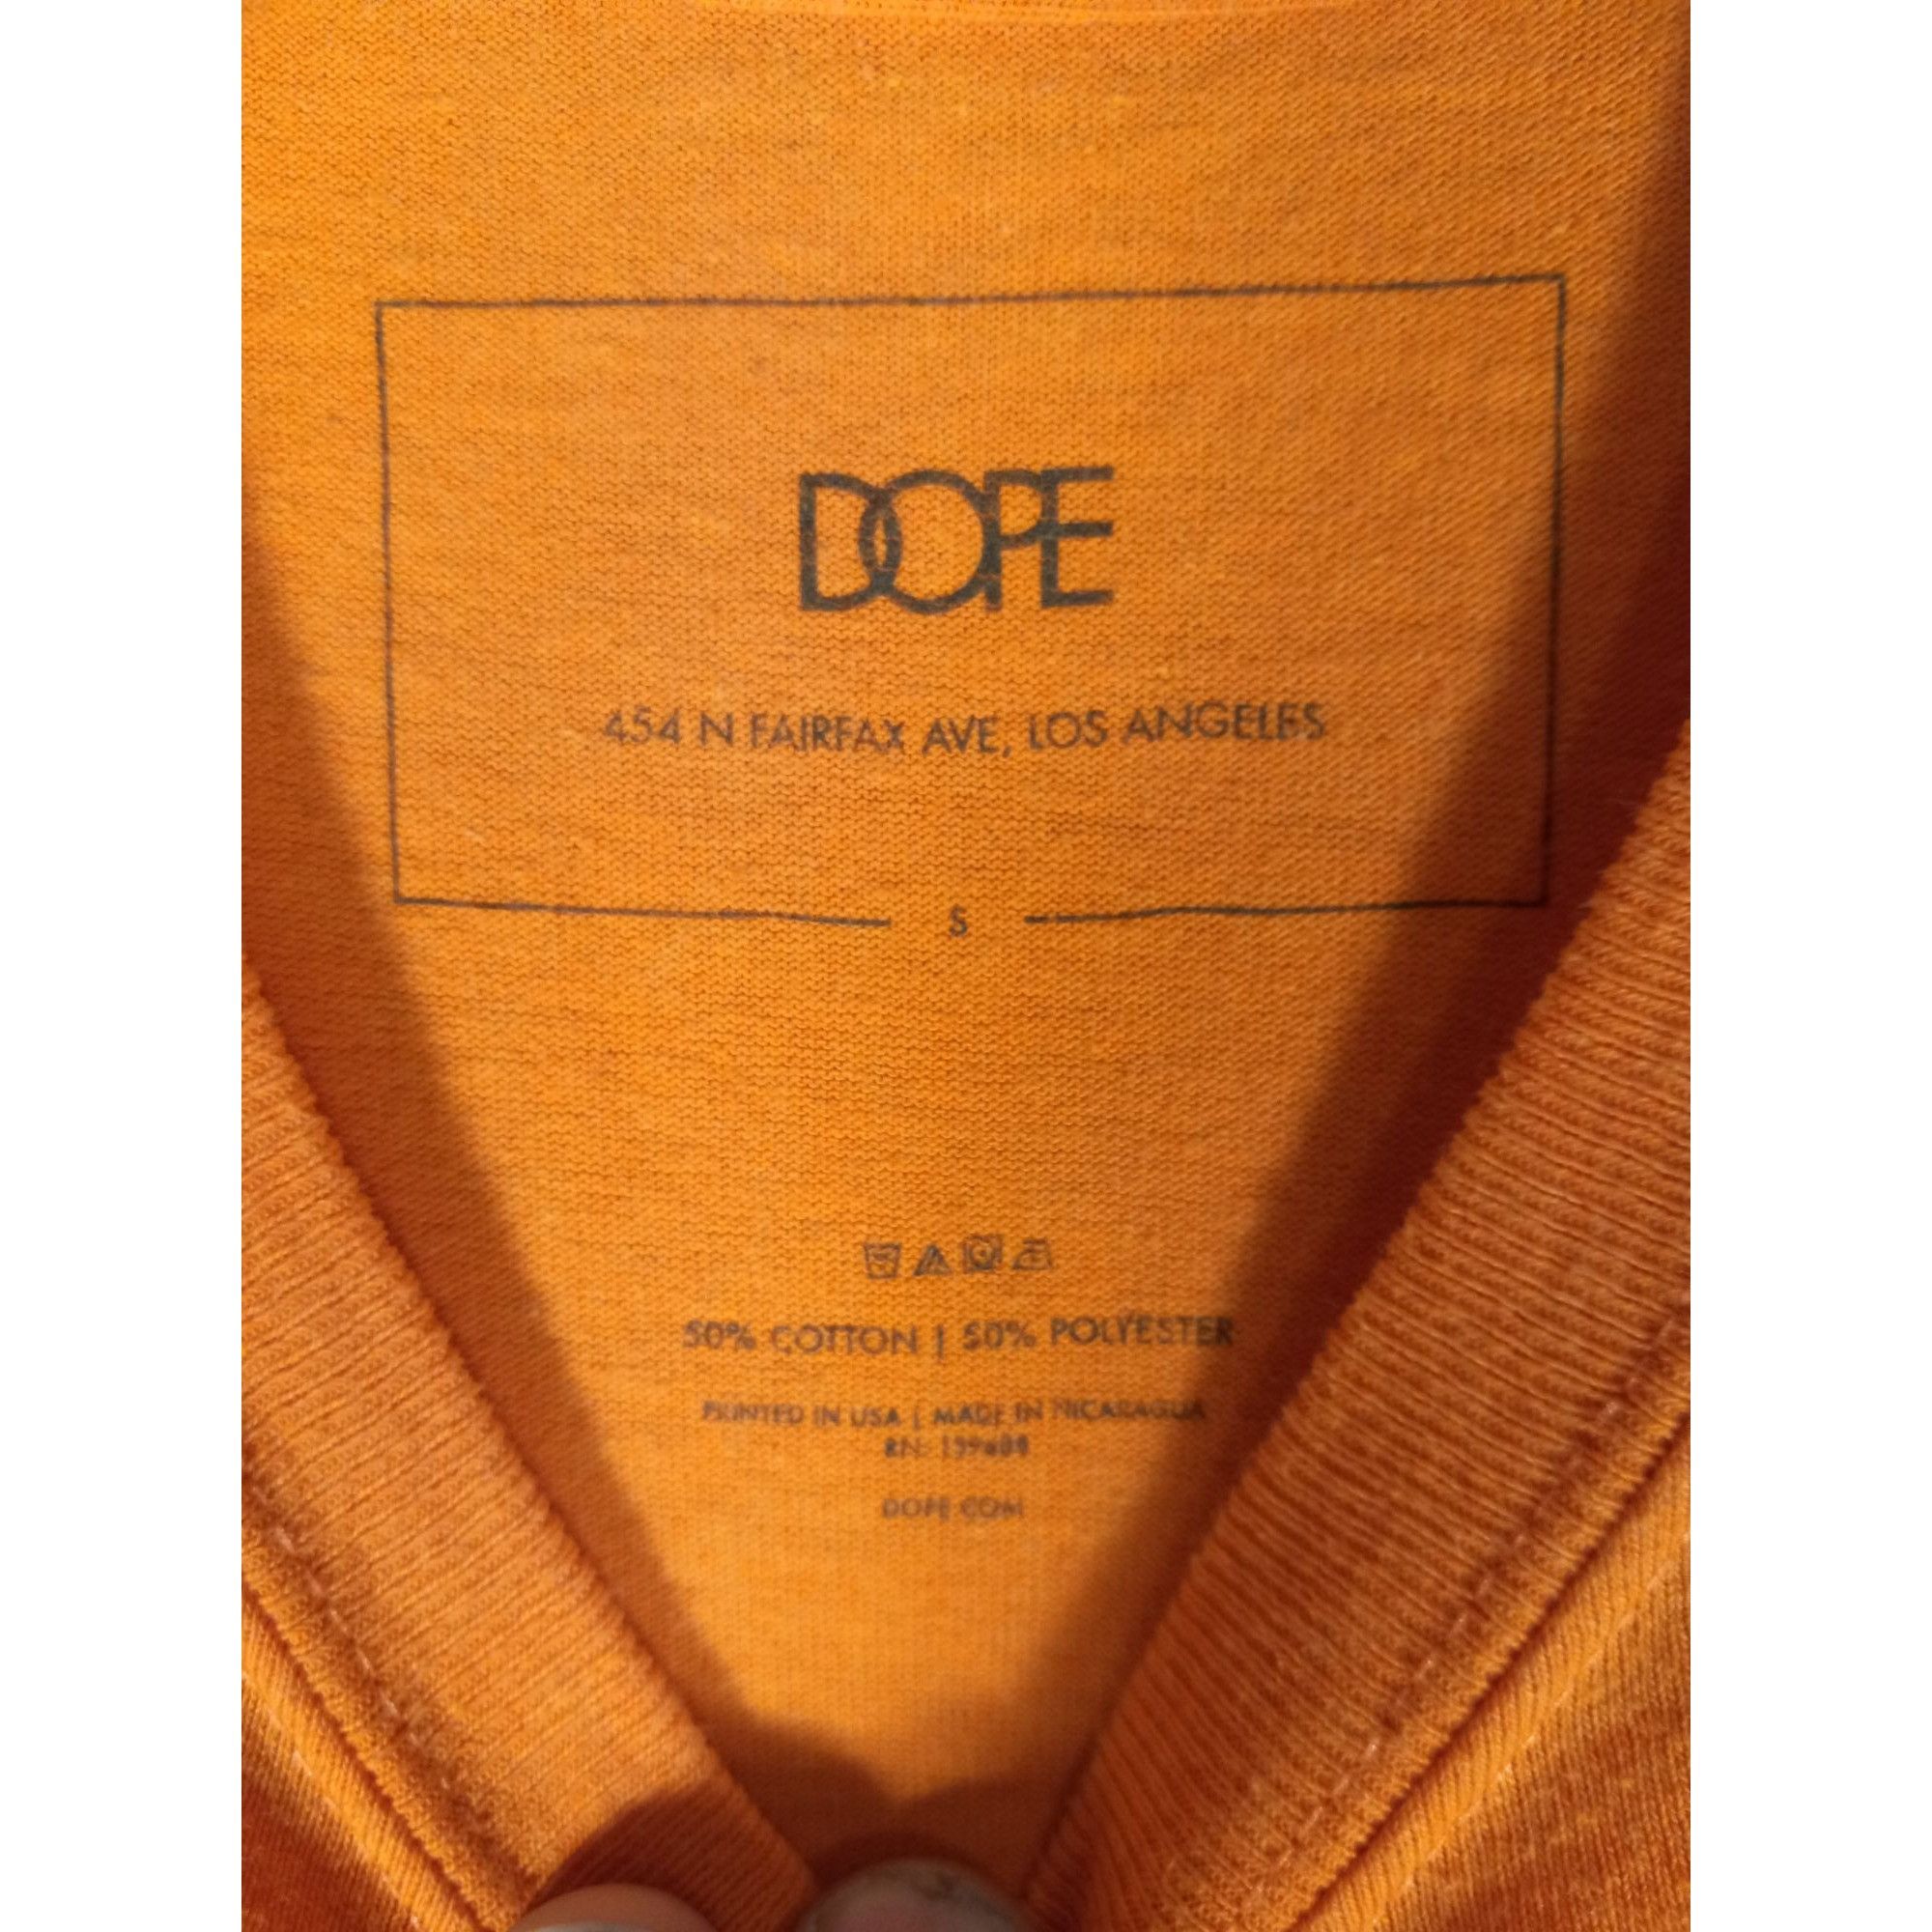 Dope DOPE orange Camo LOGO short sleeve t-shirt size s Size US S / EU 44-46 / 1 - 3 Preview